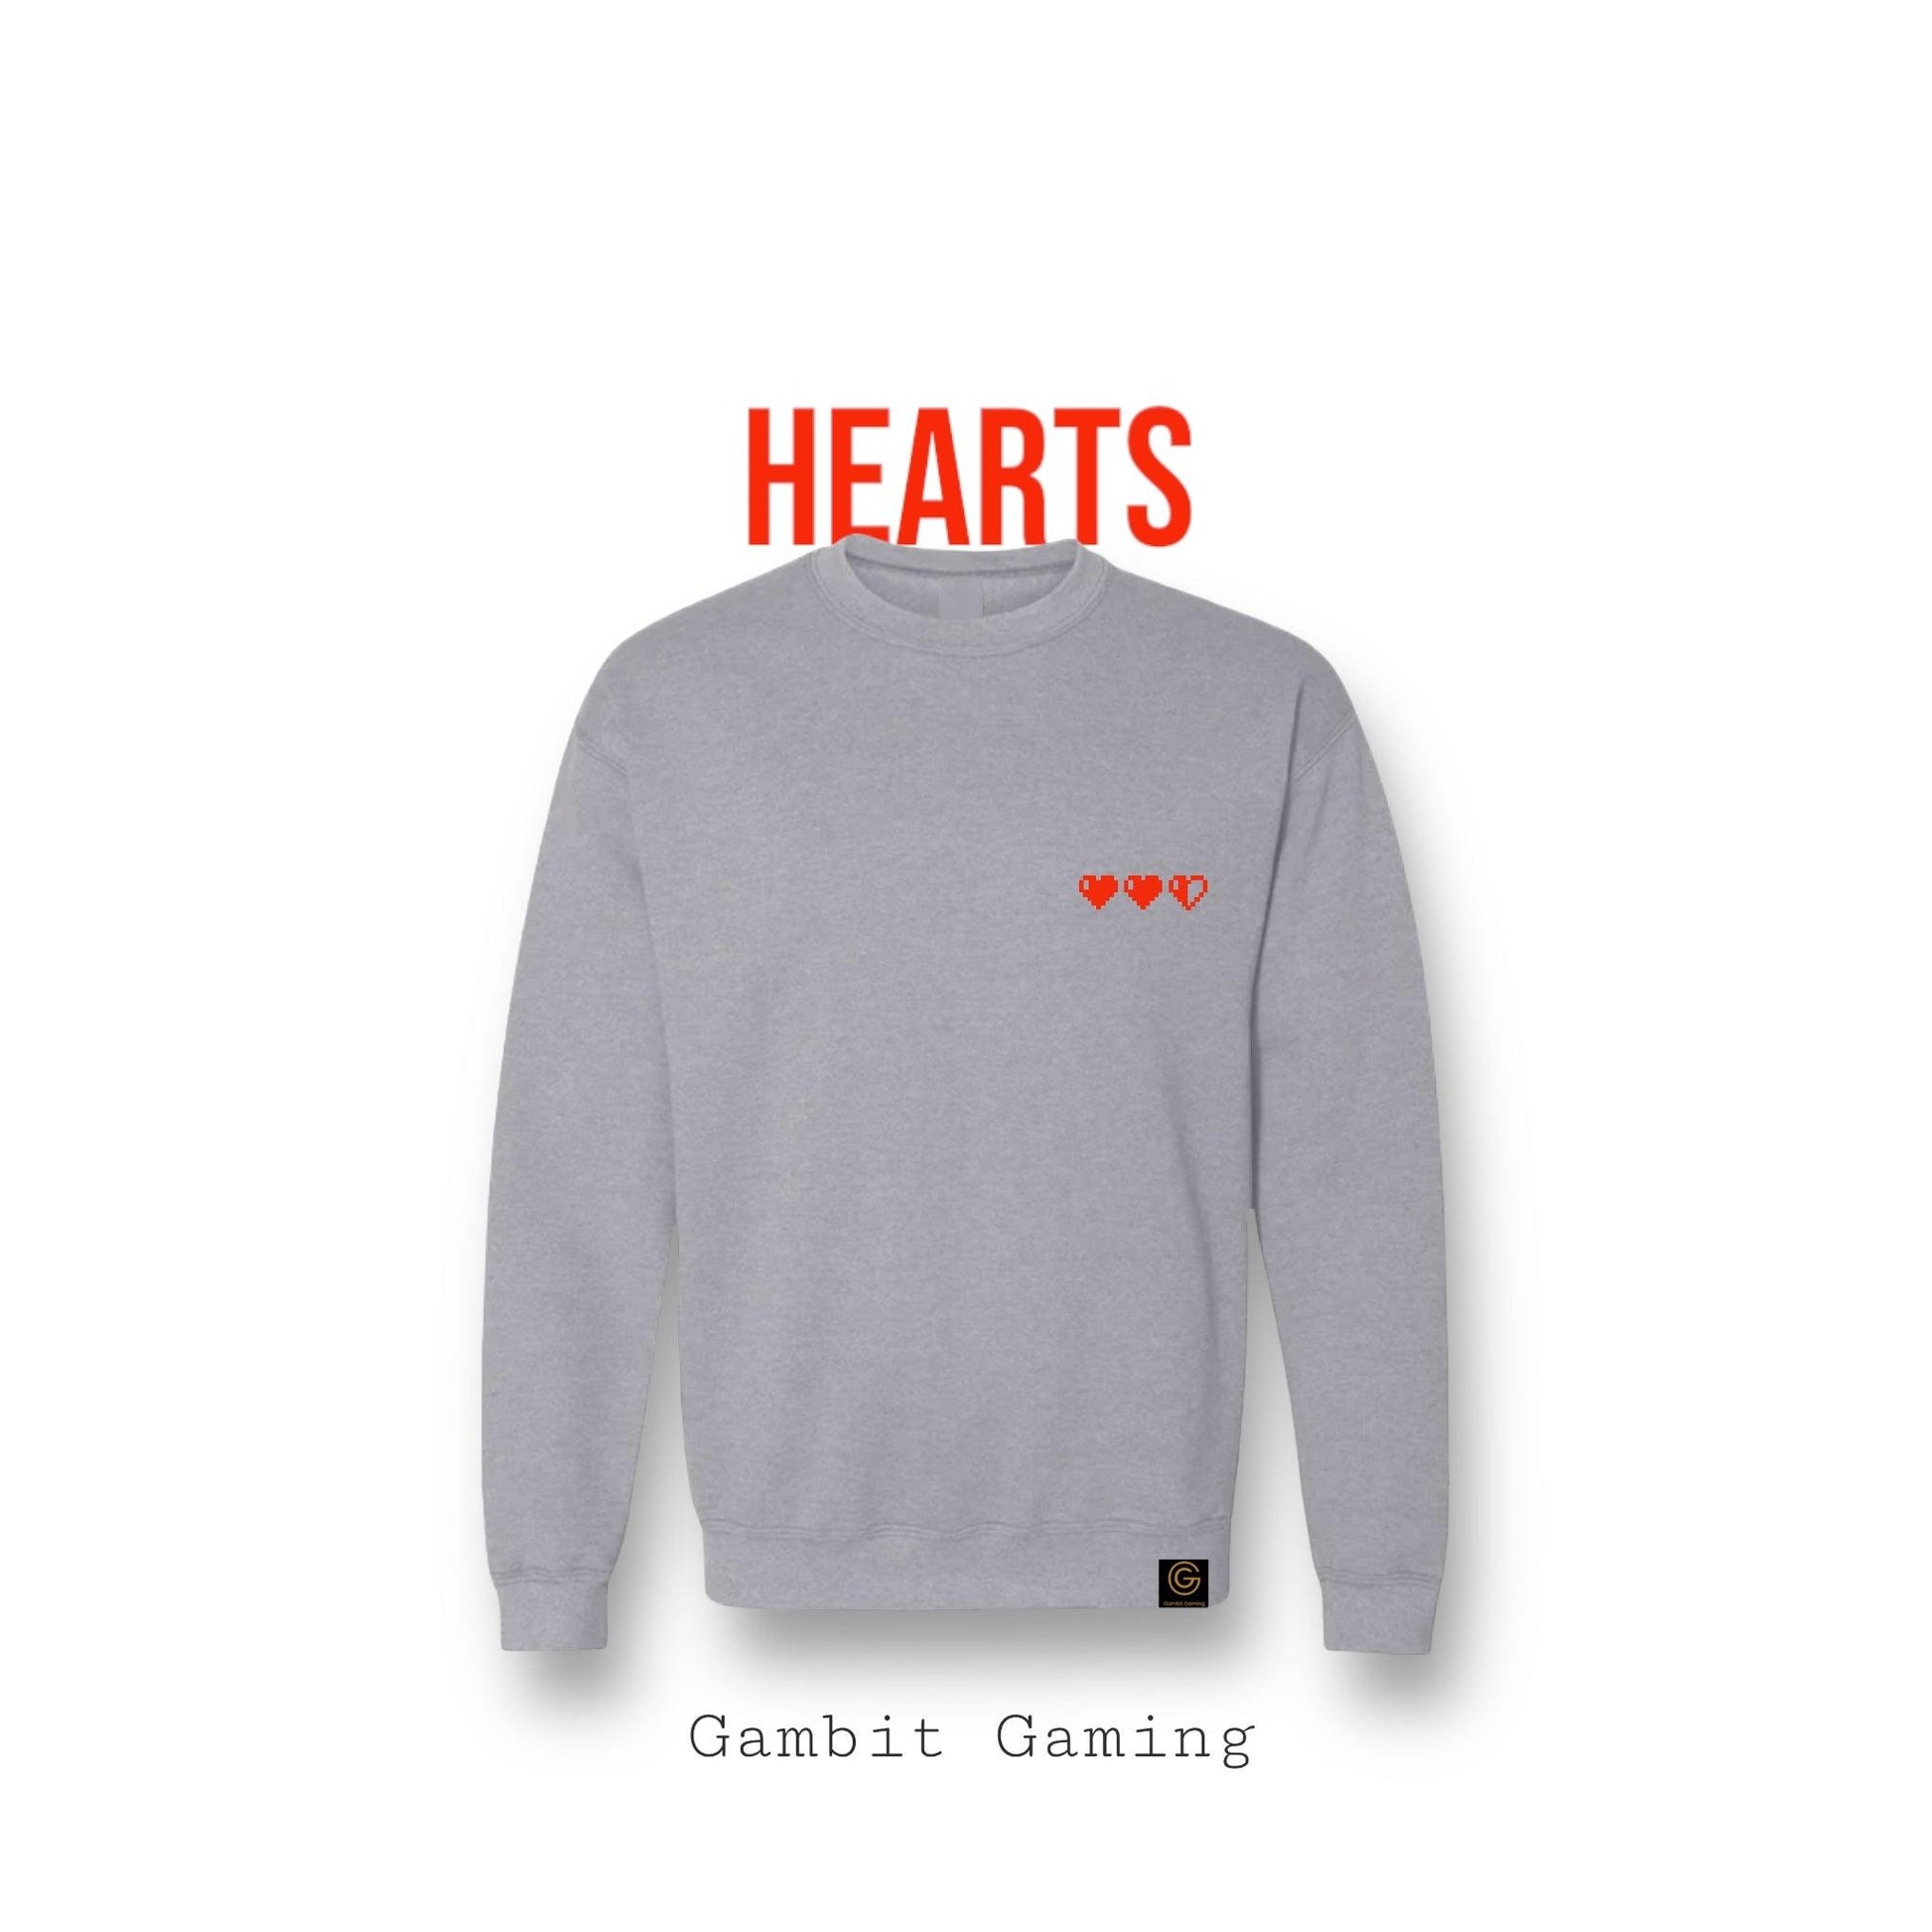 Hearts Sweater - Gambit Gaming